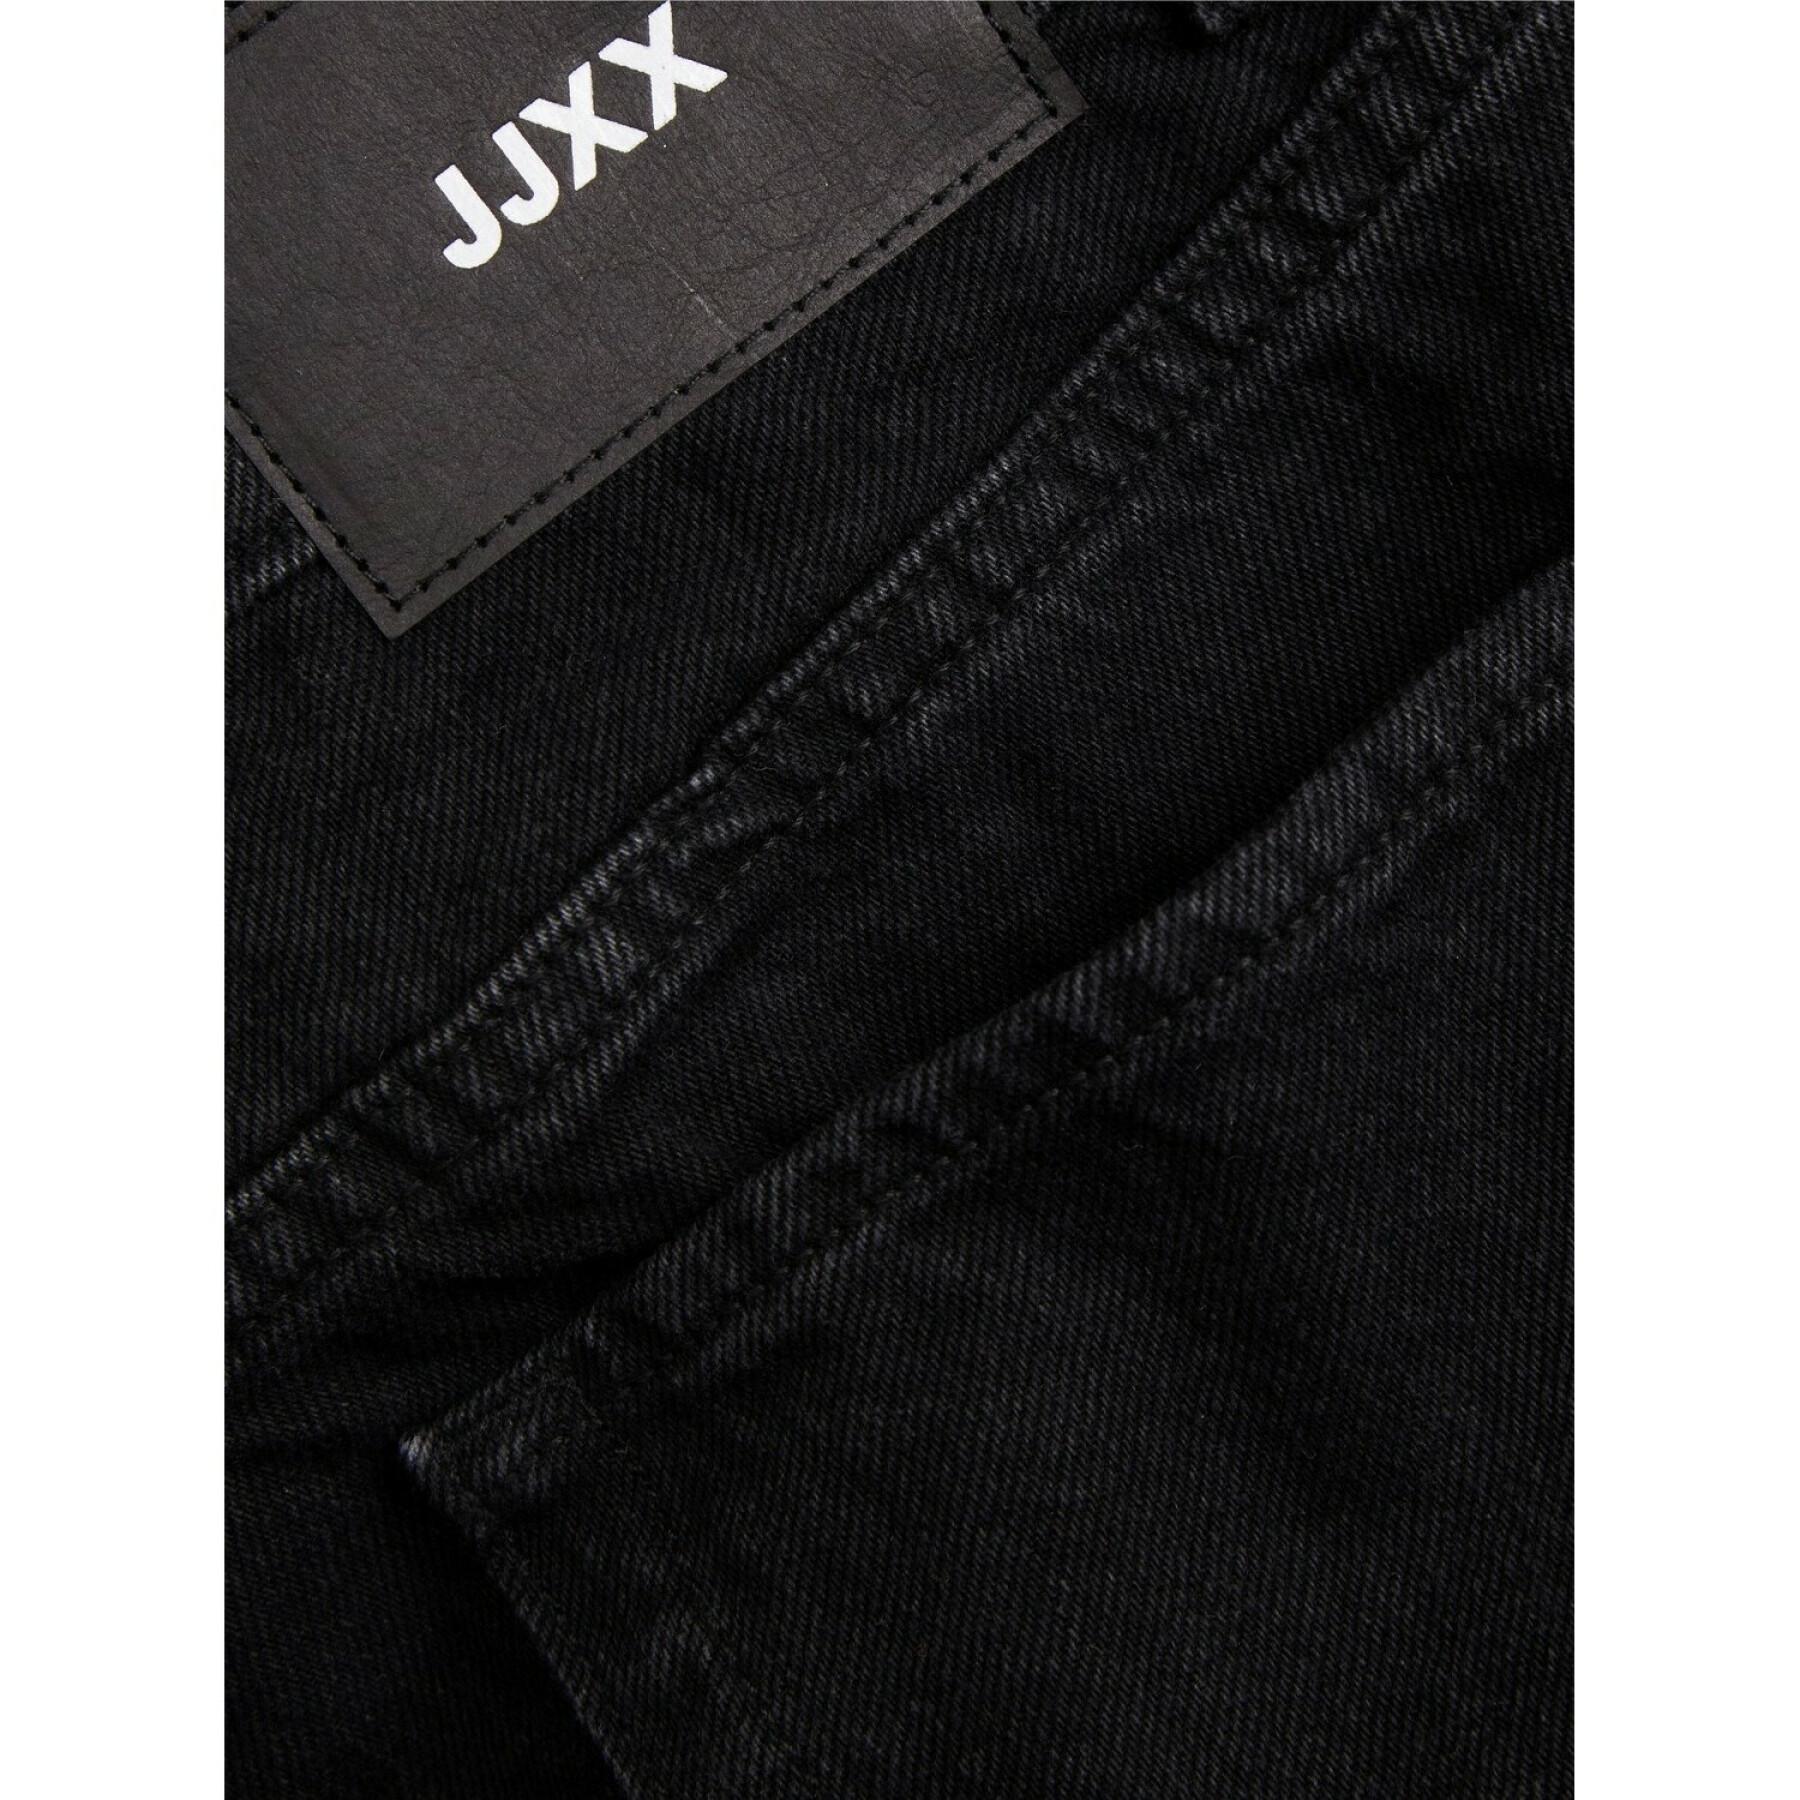 Jeans large femme JJXX seville nr5004